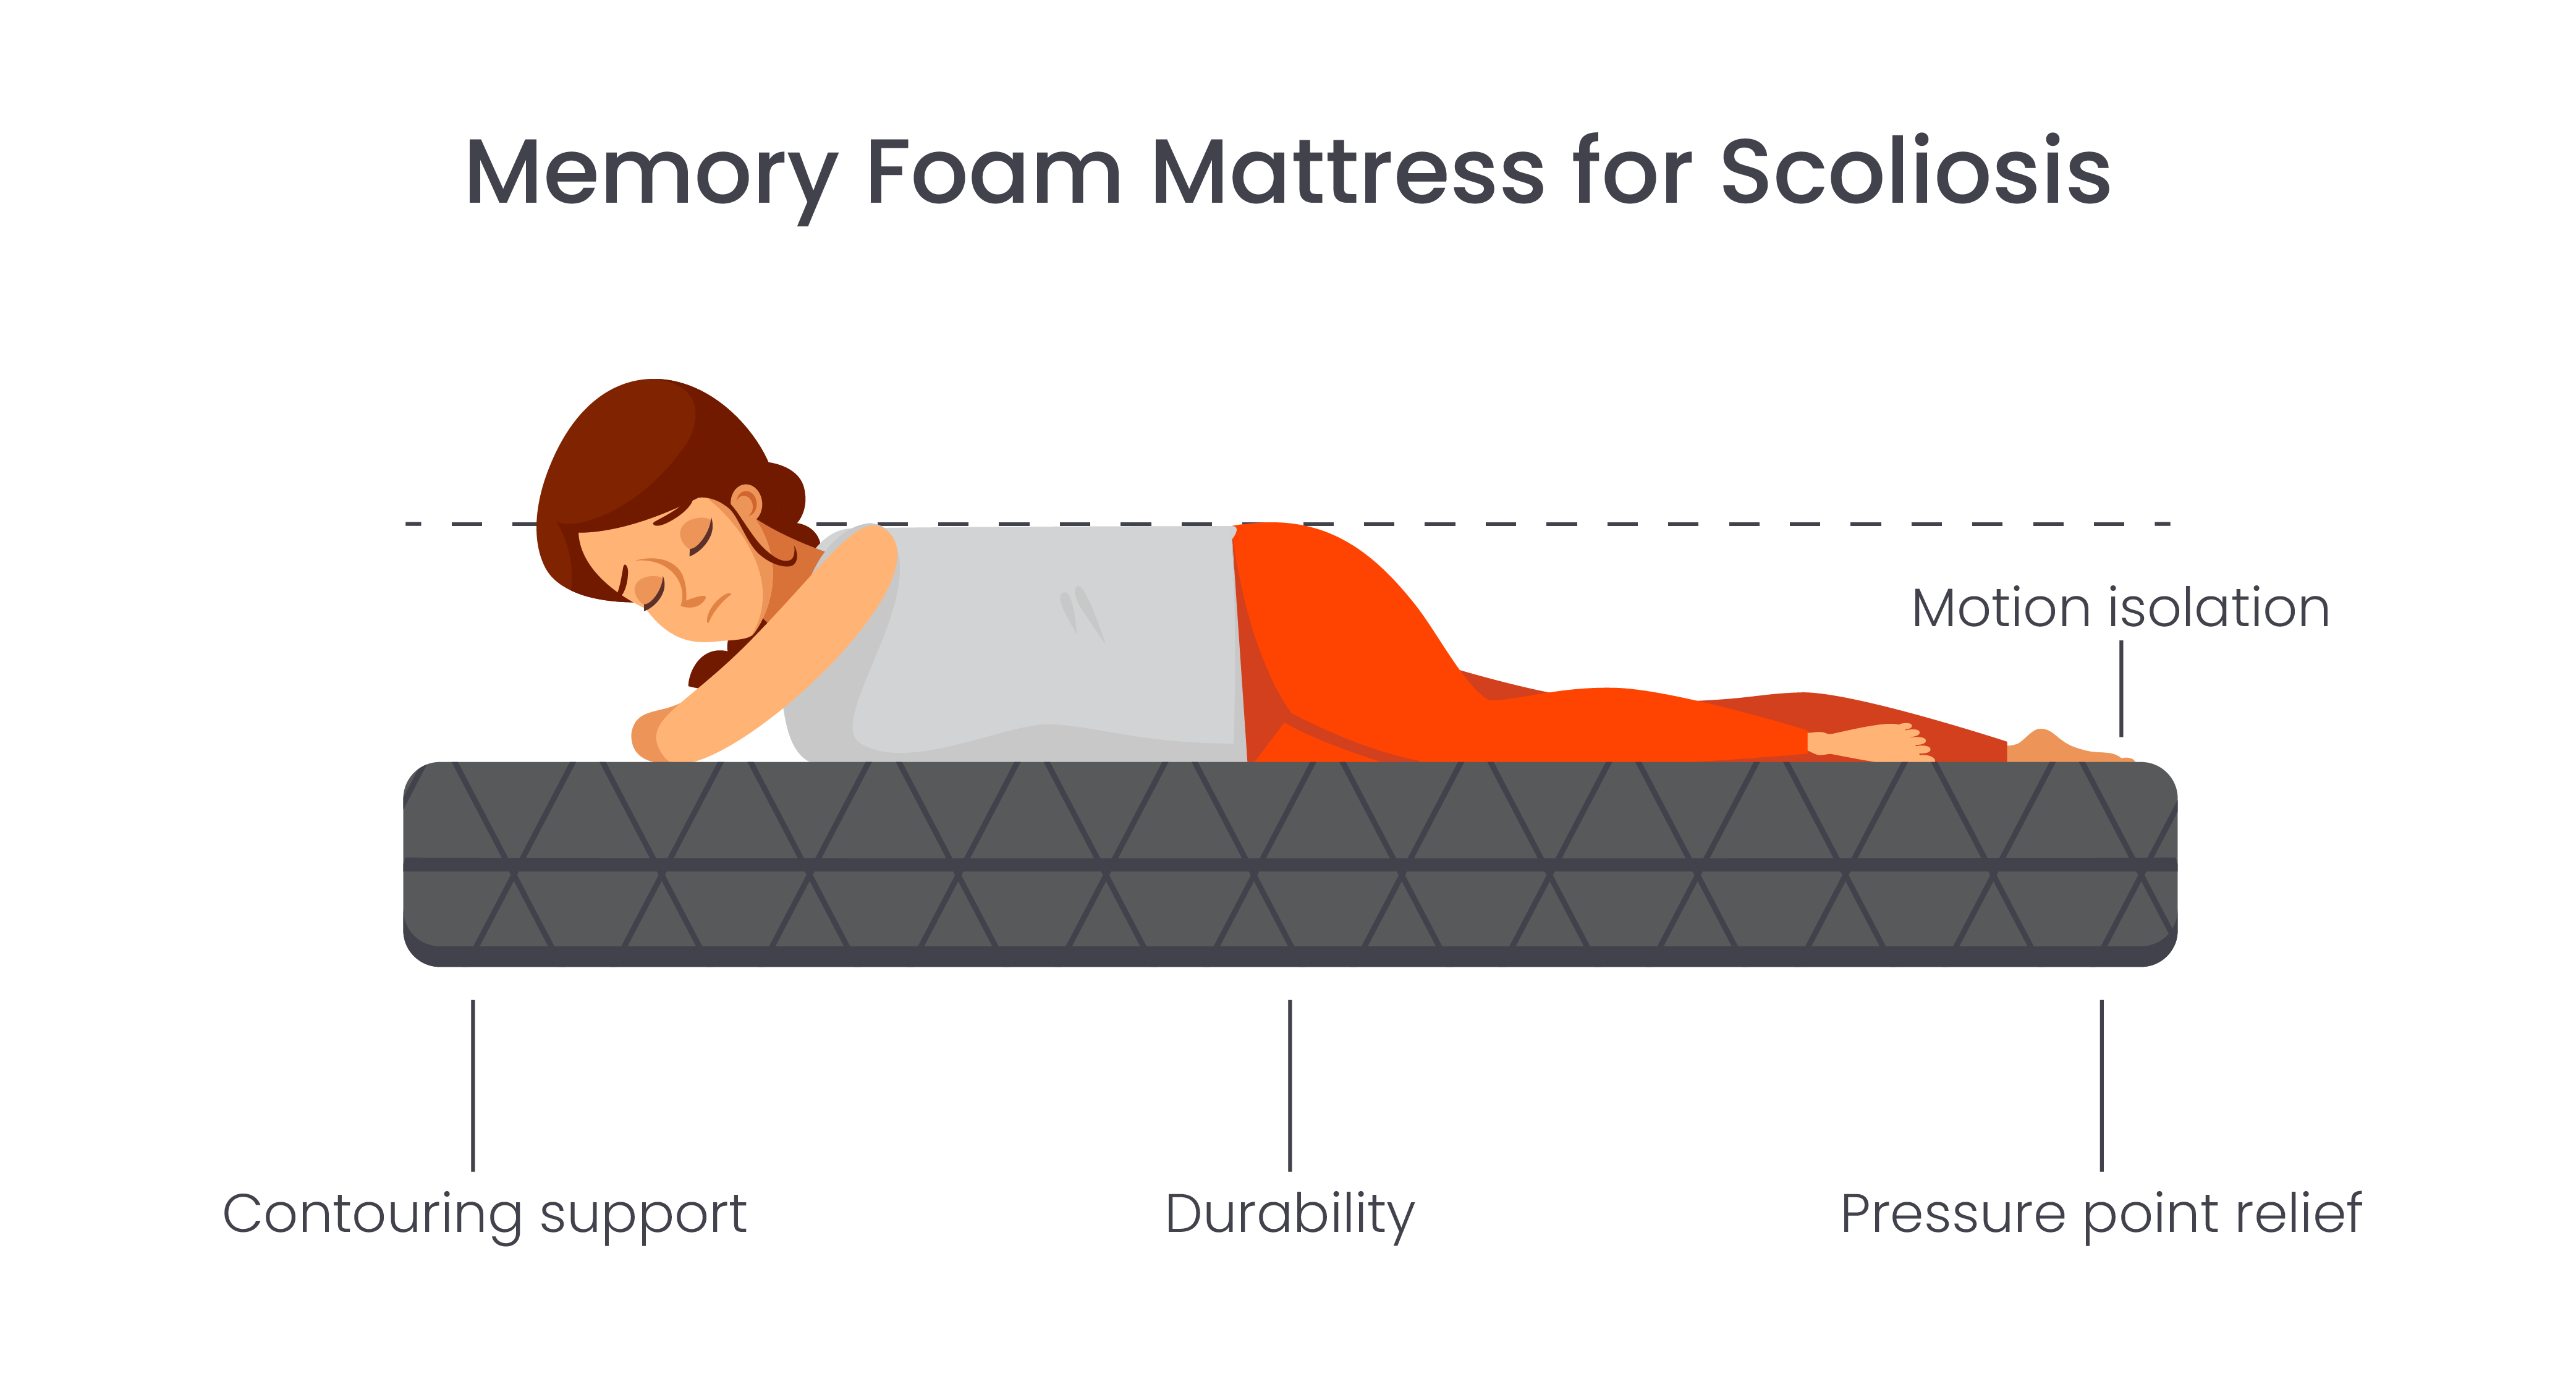 Memory foam mattress for scoliosis